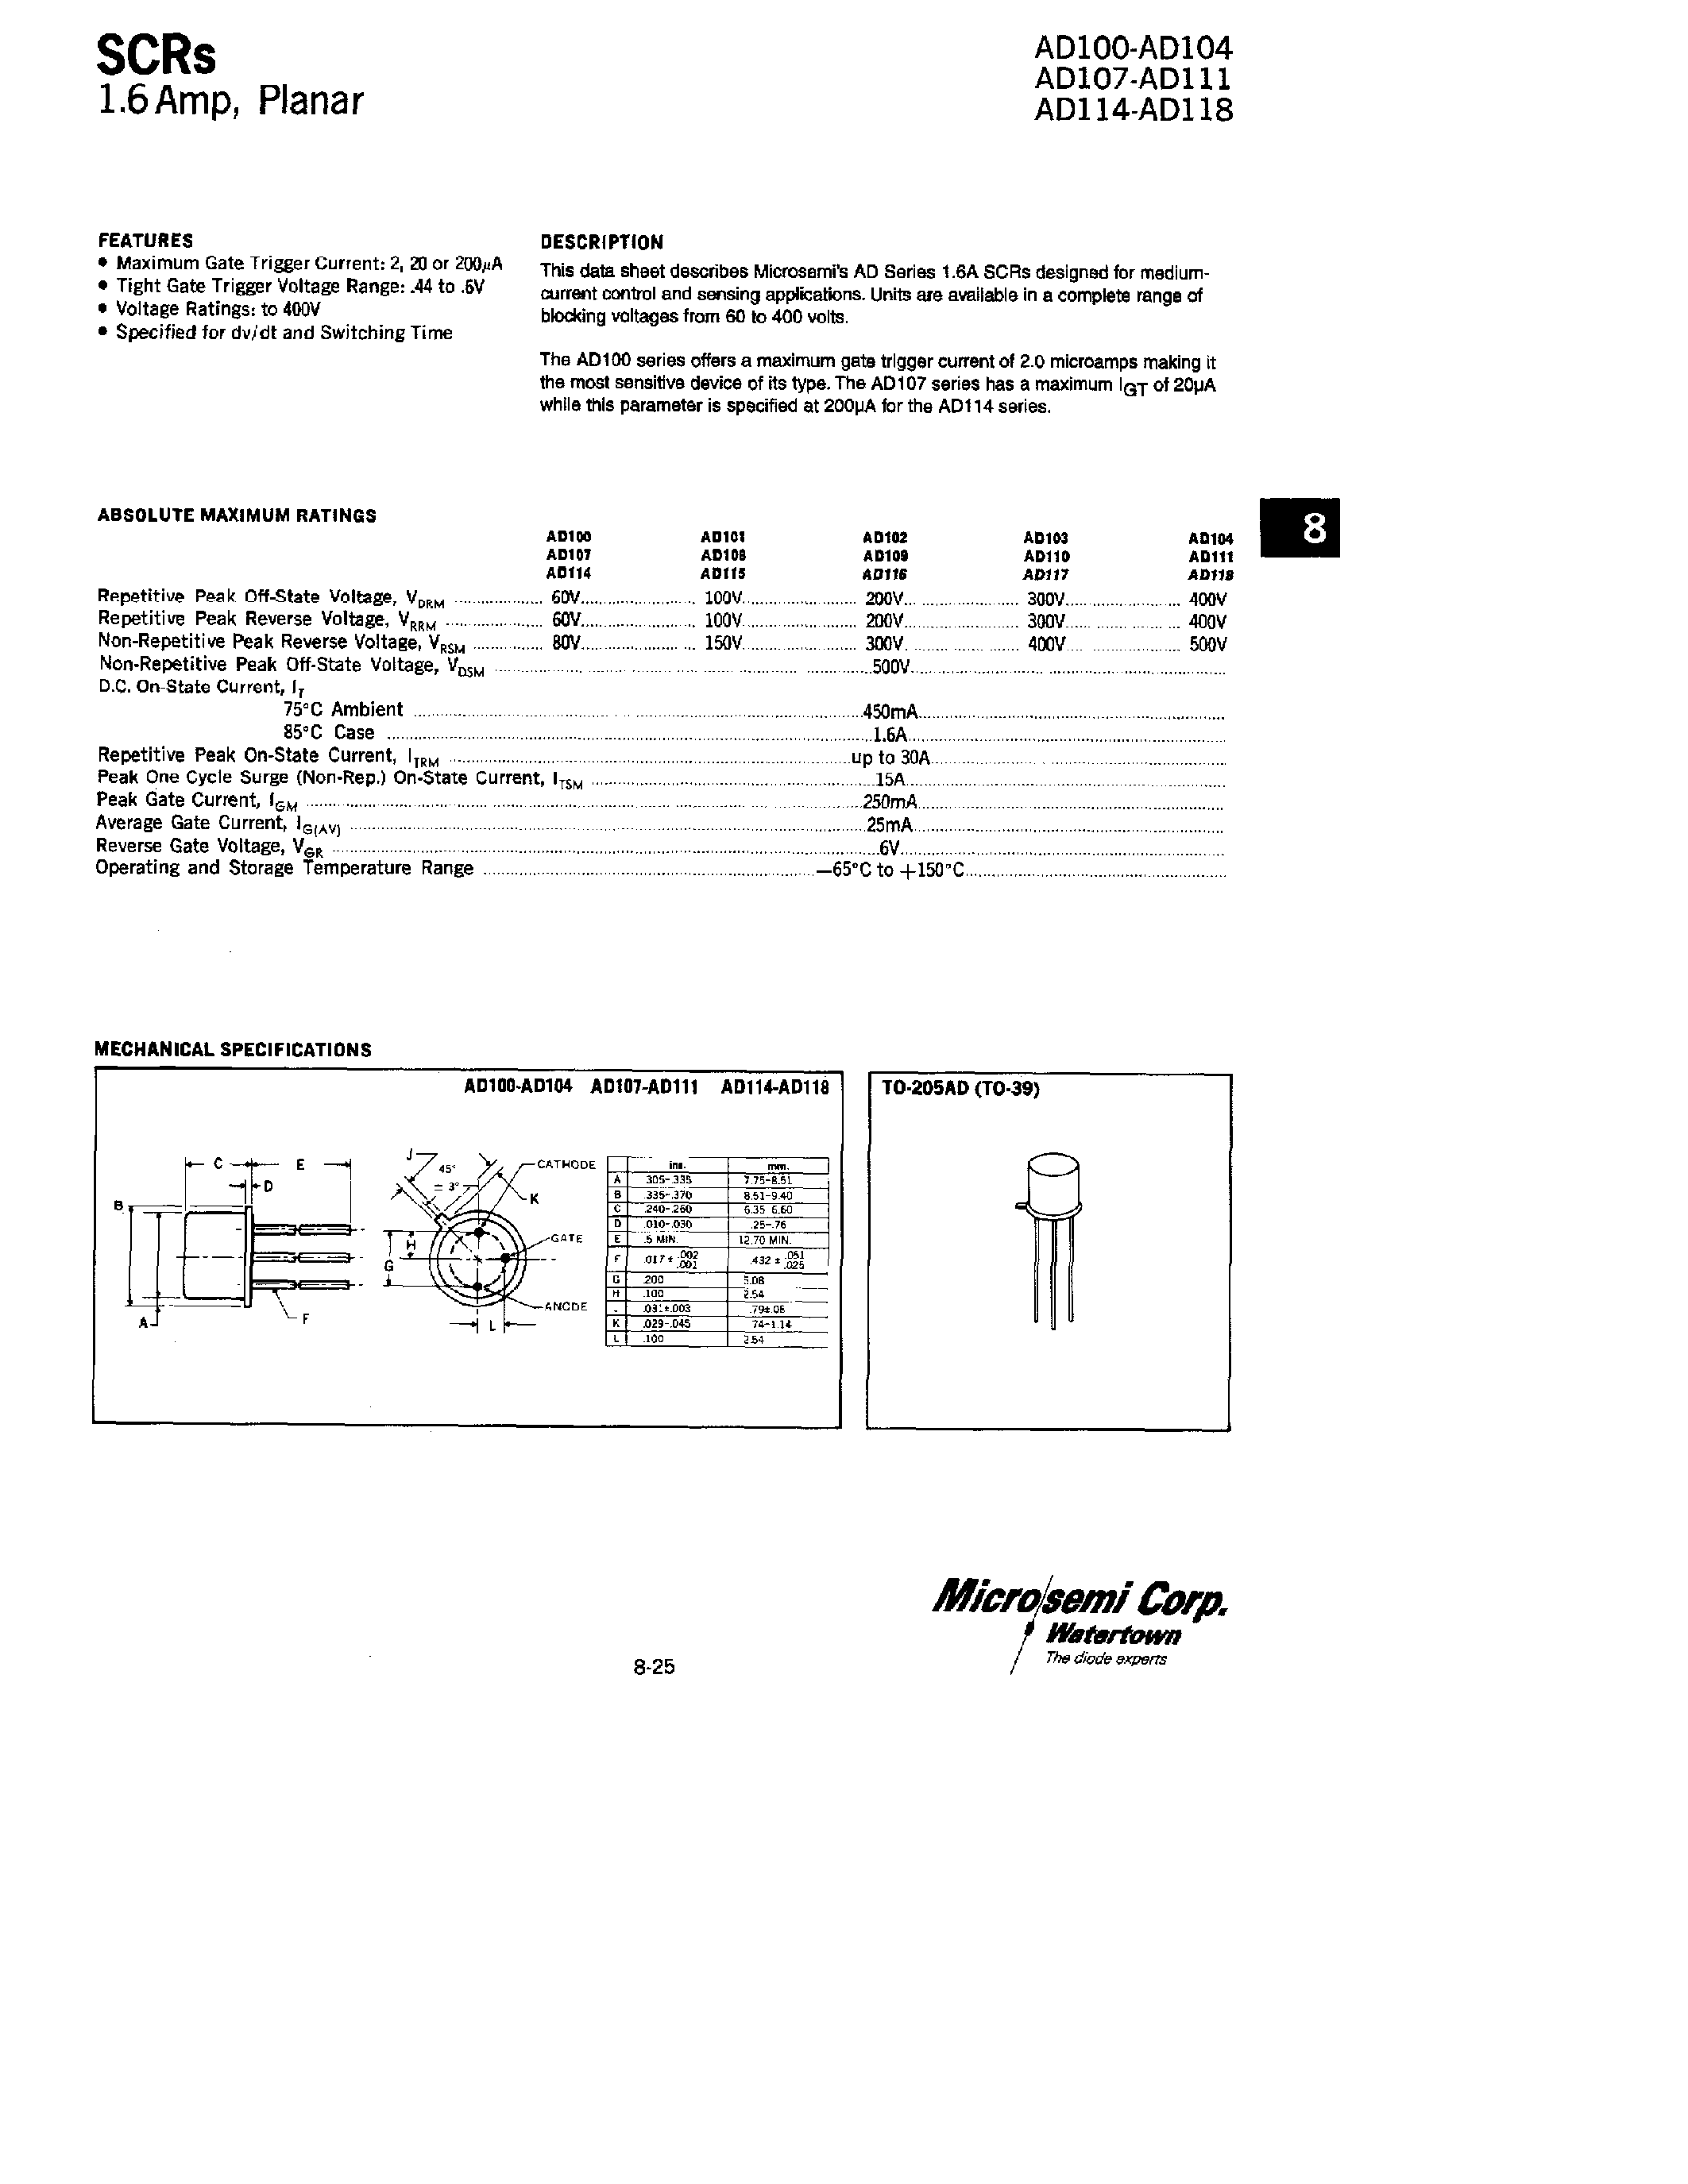 Datasheet AD117 - SCRs 1.5 Amp/ Planar page 1